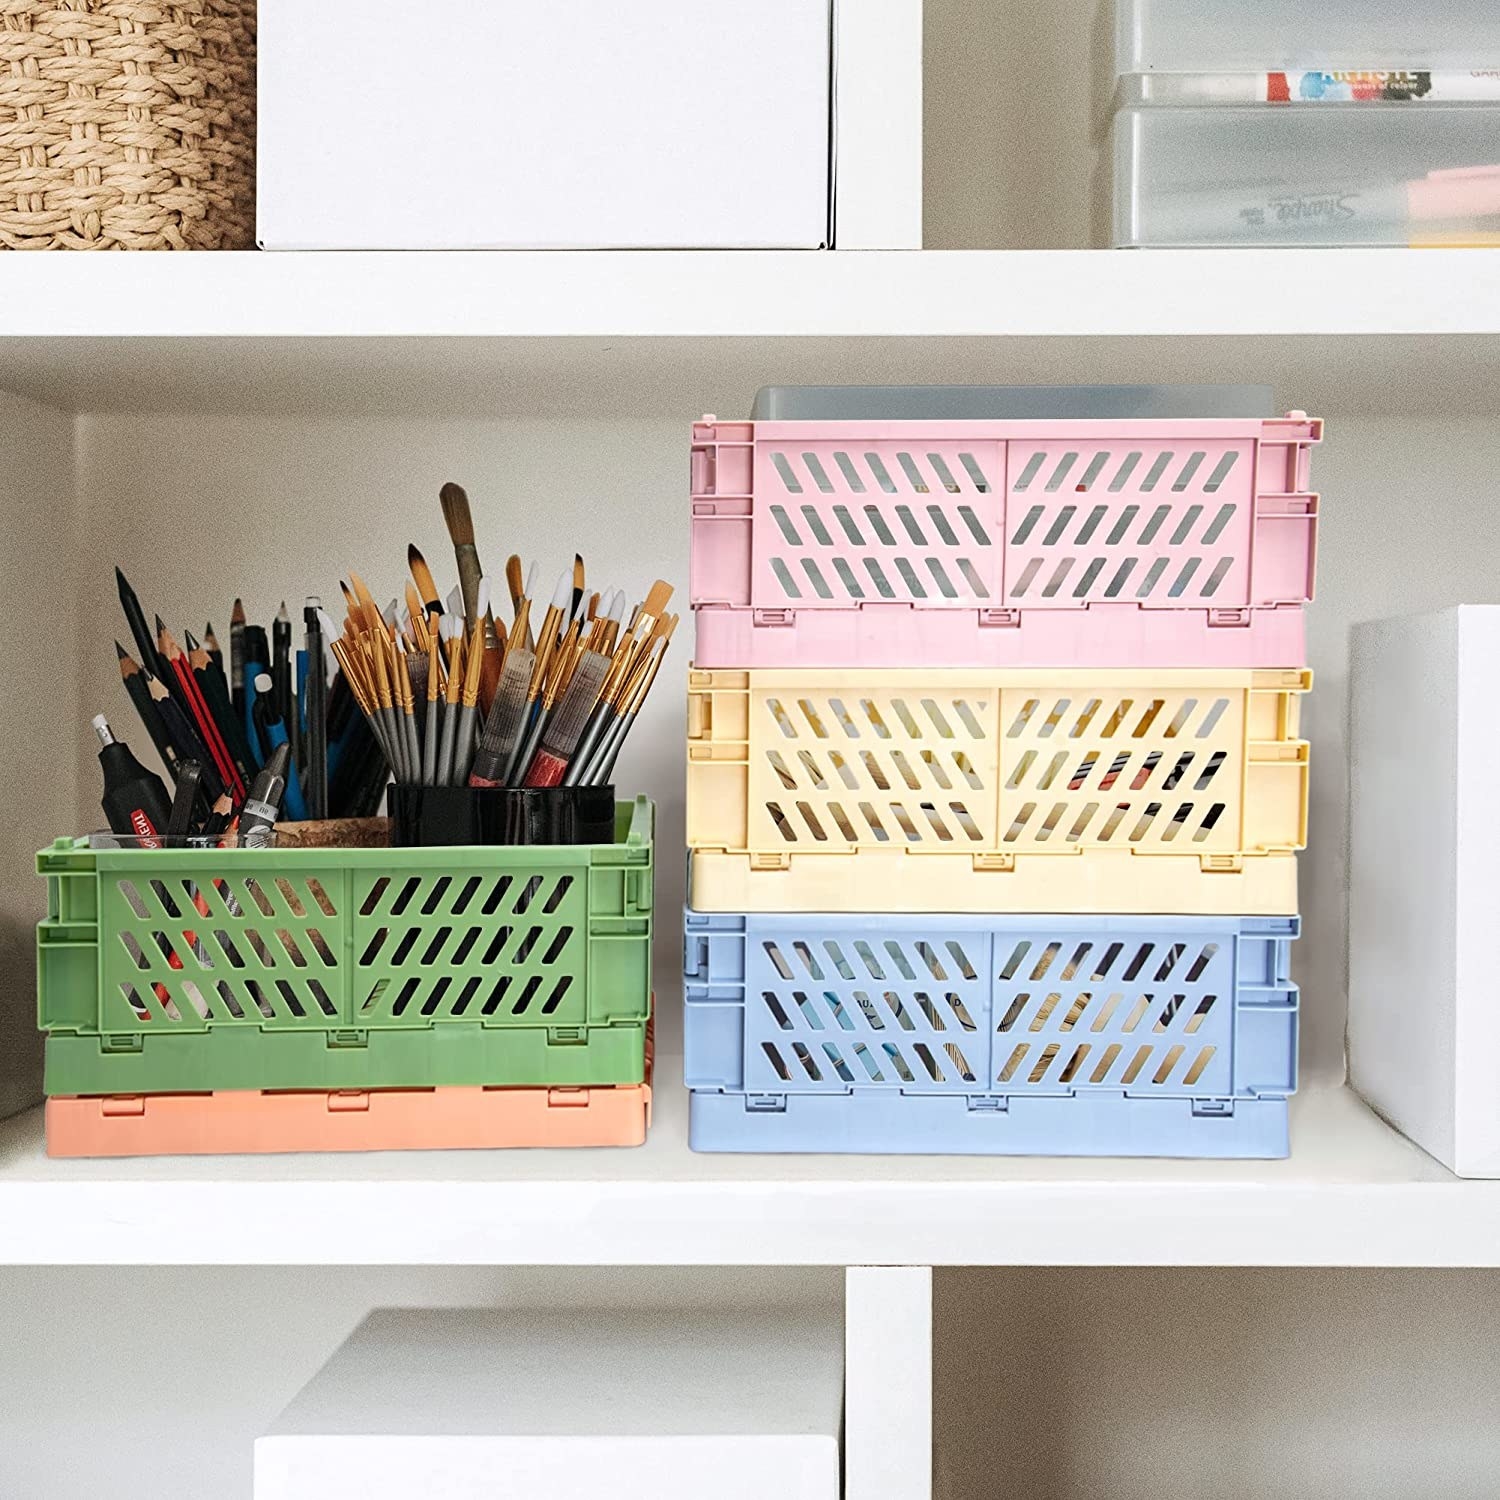 colourful crates on a shelf